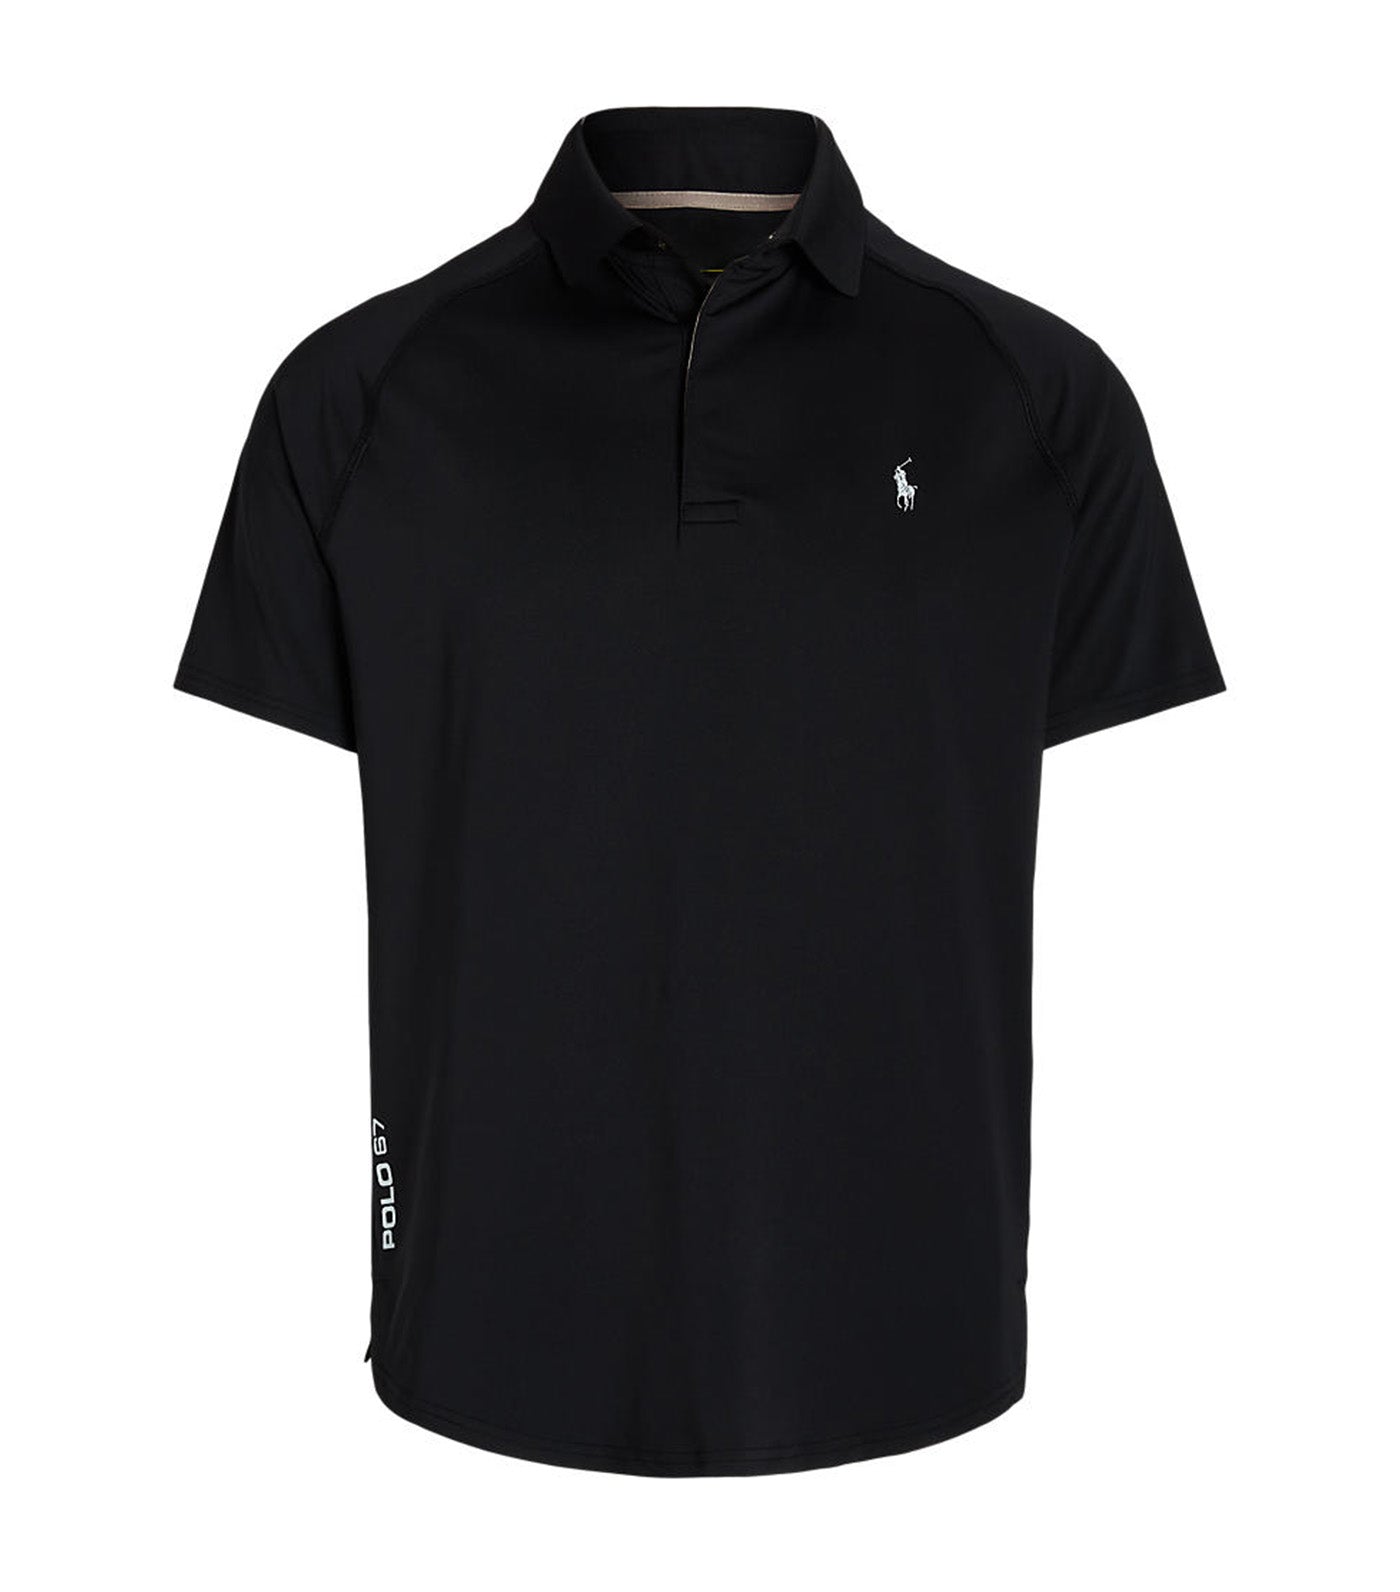 Men's Custom Slim Fit Performance Polo Shirt Polo Black